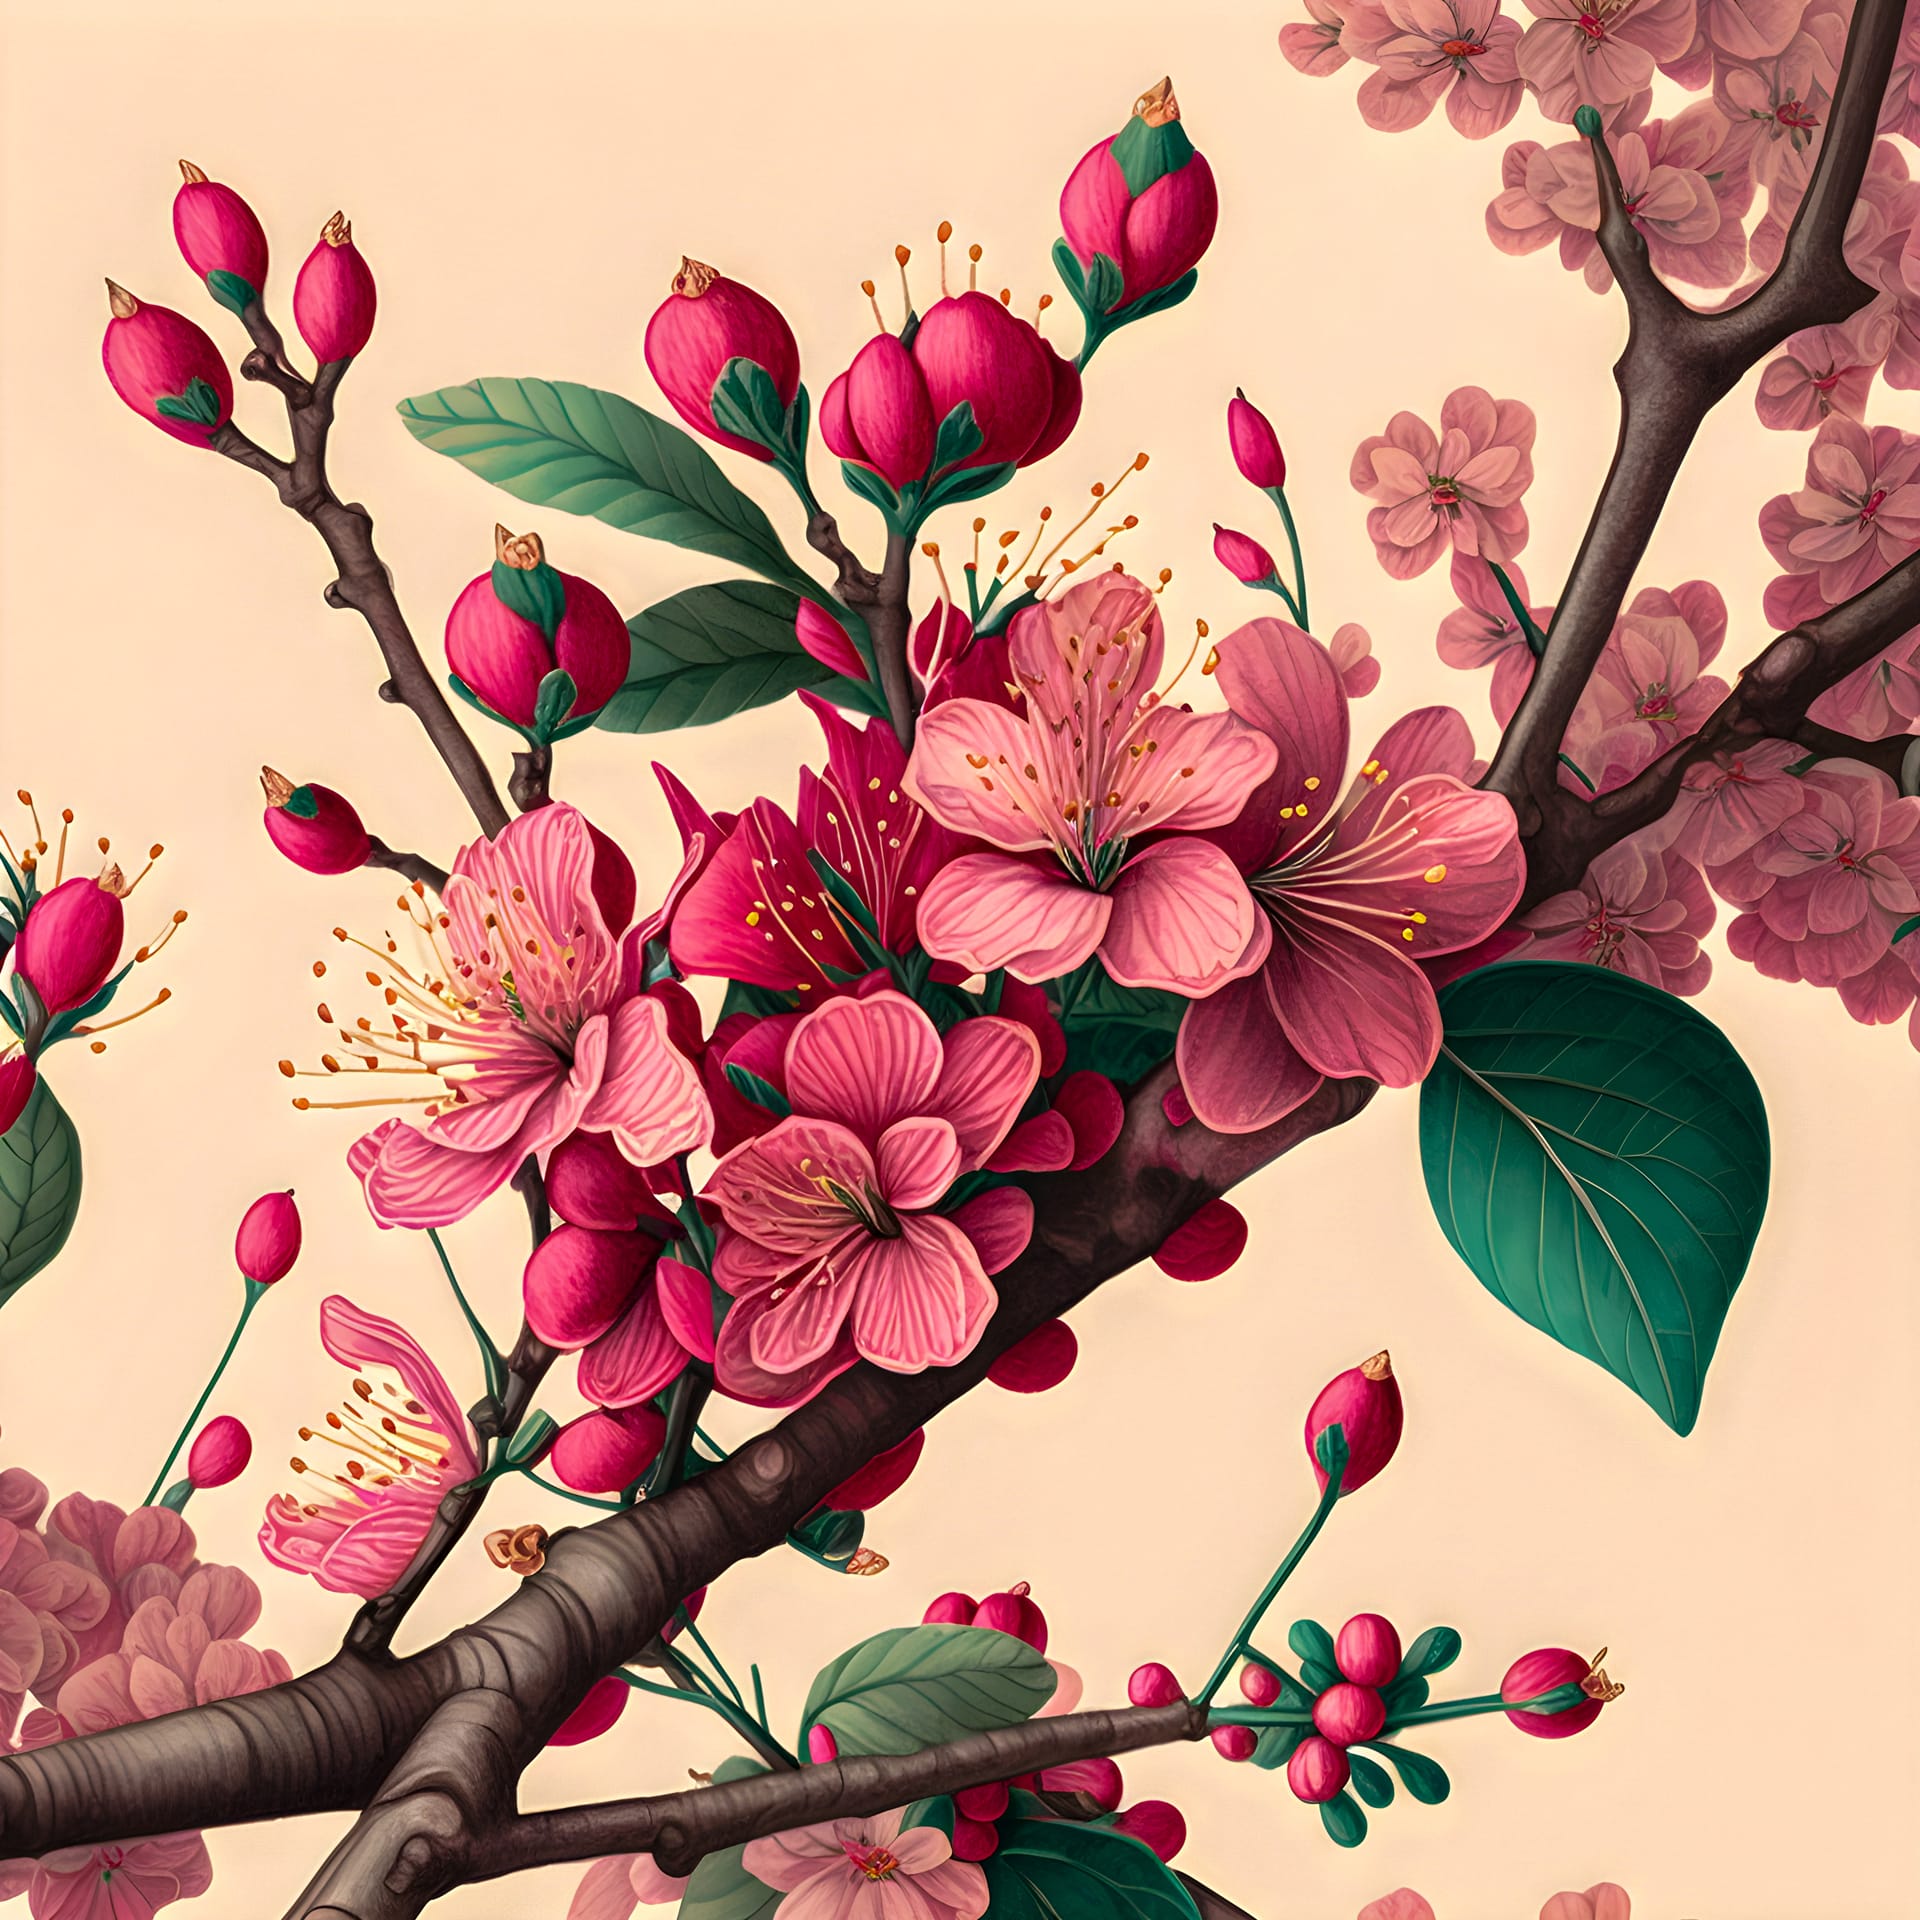 Cherry blossom tree hand drawn illustration excellent image